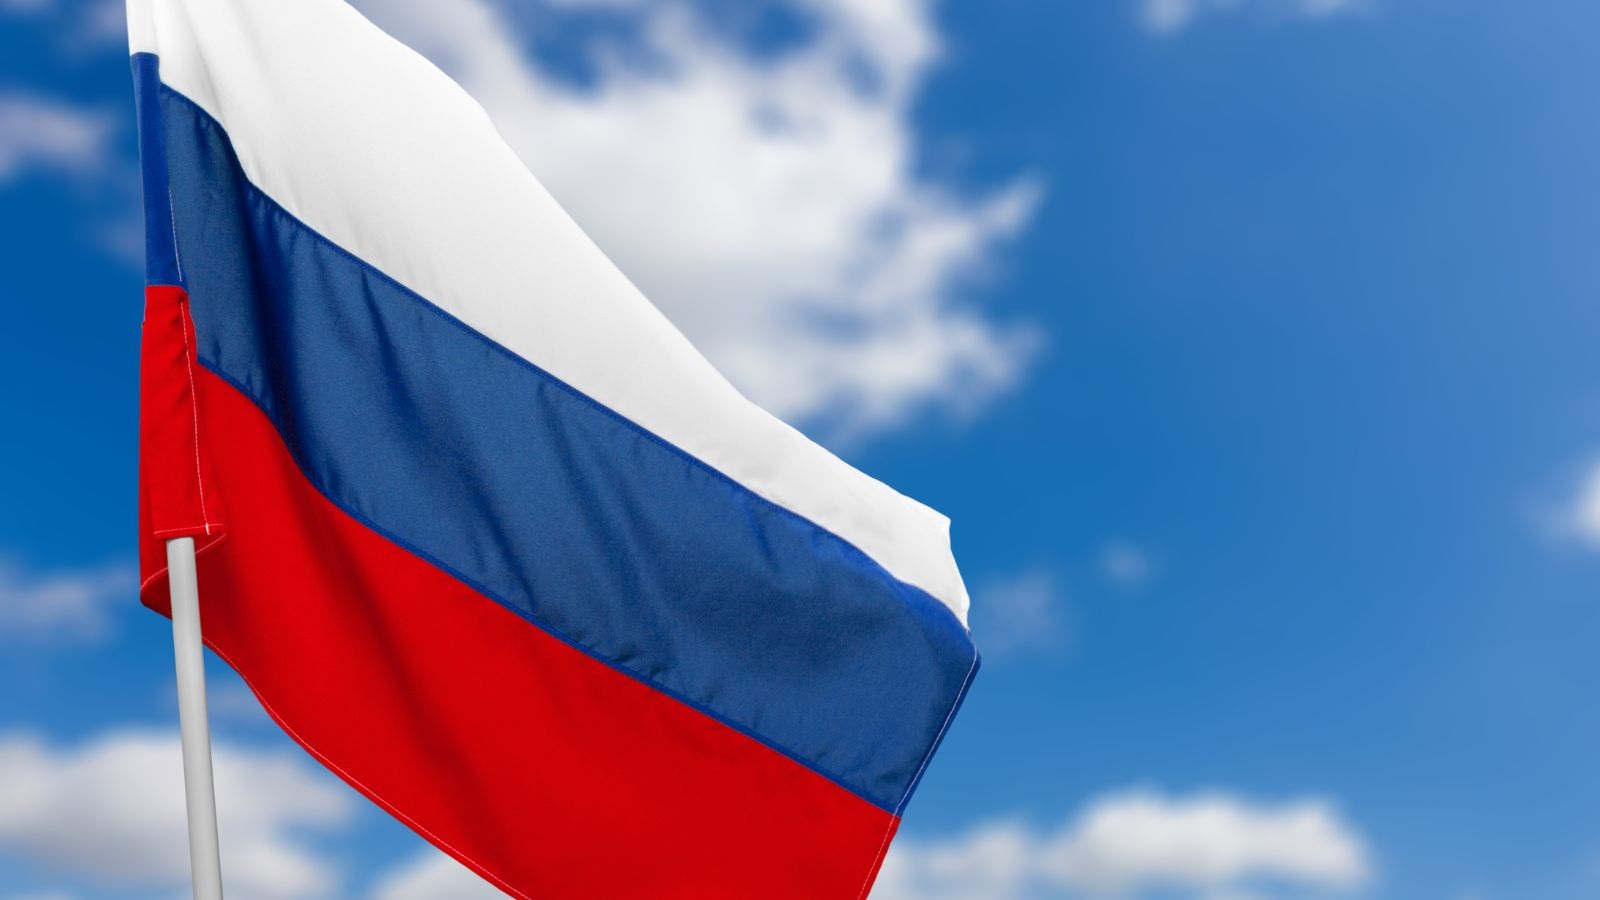 Флаг Россия